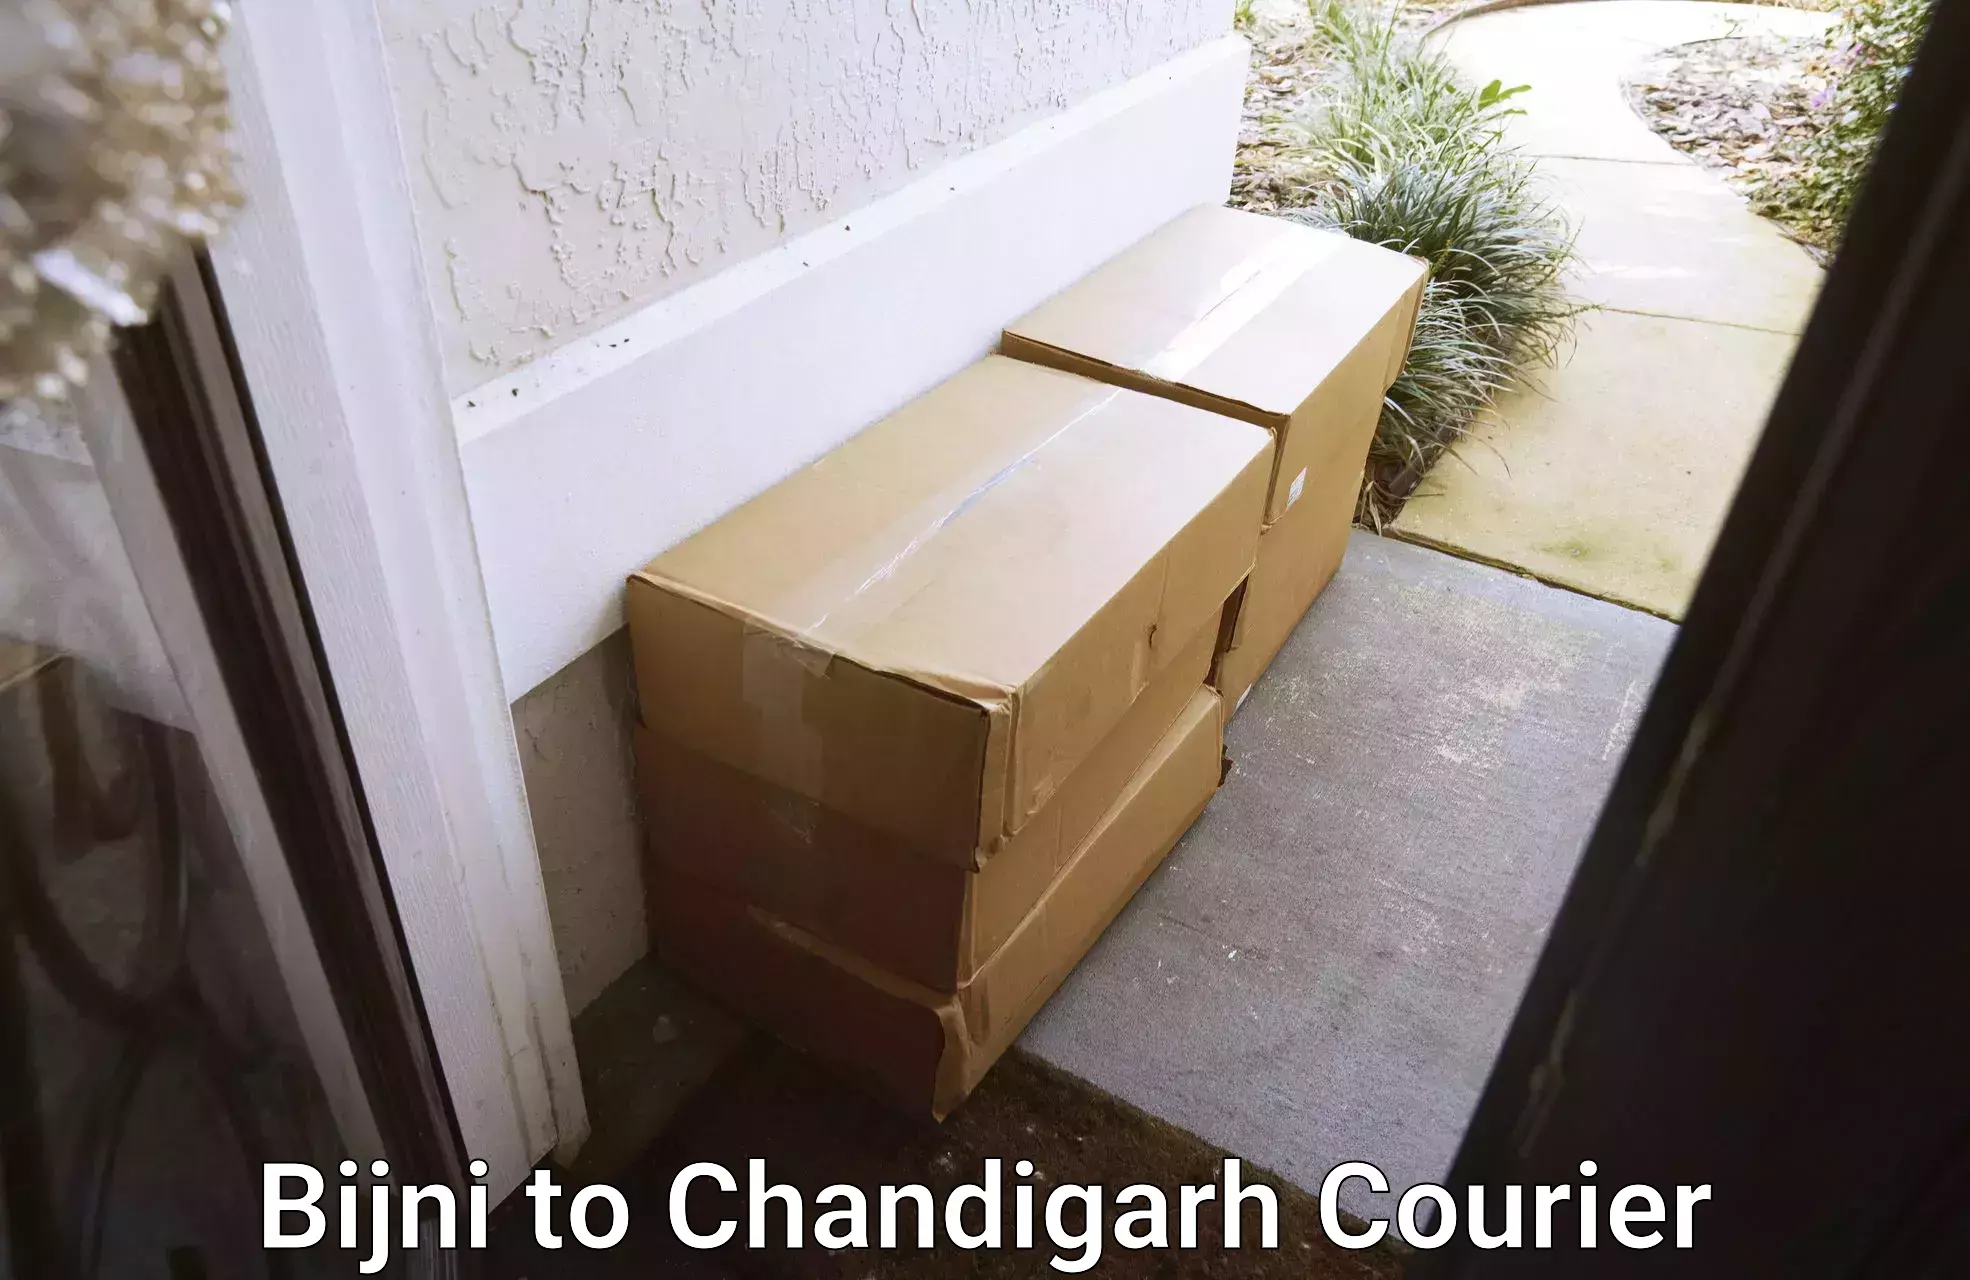 Multi-service courier options Bijni to Chandigarh